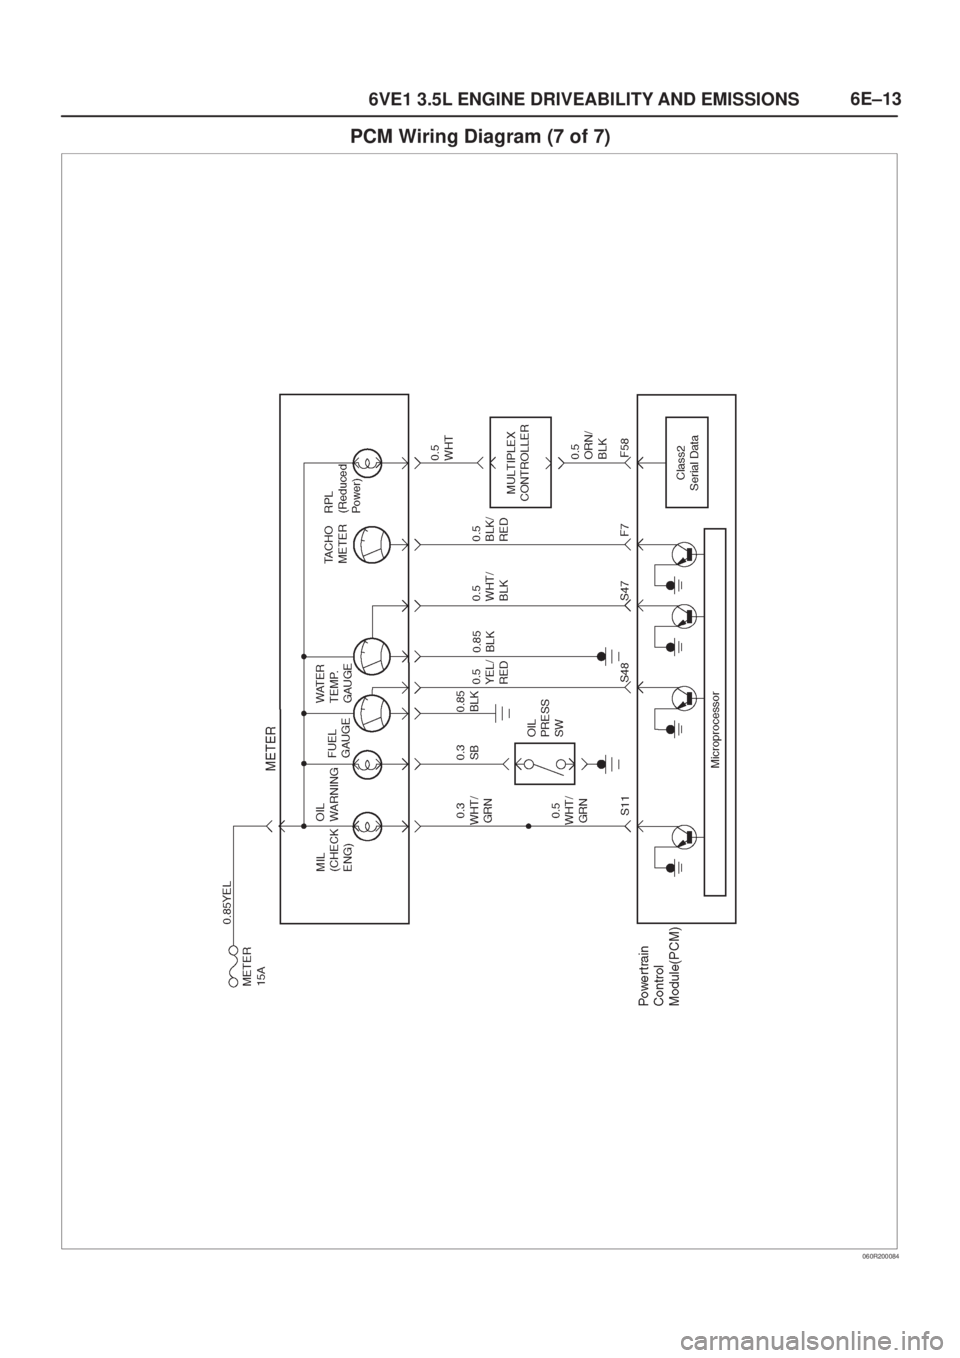 ISUZU AXIOM 2002  Service Repair Manual 6E±13
6VE1 3.5L ENGINE DRIVEABILITY AND EMISSIONS
PCM Wiring Diagram (7 of 7)
060R200084 